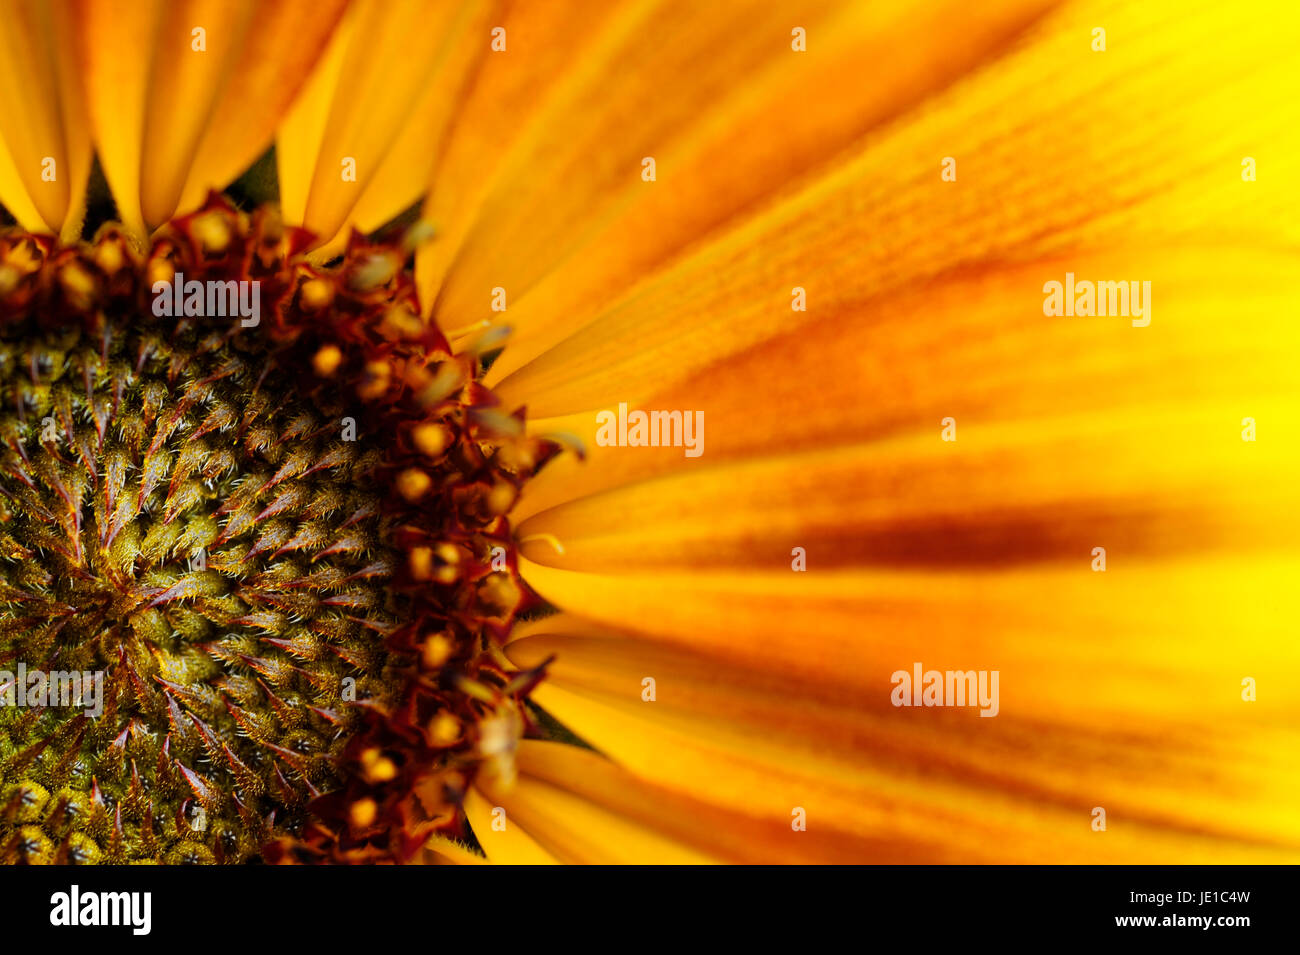 Abstrakt Nahaufnahme einer Sonnenblume Stockfoto